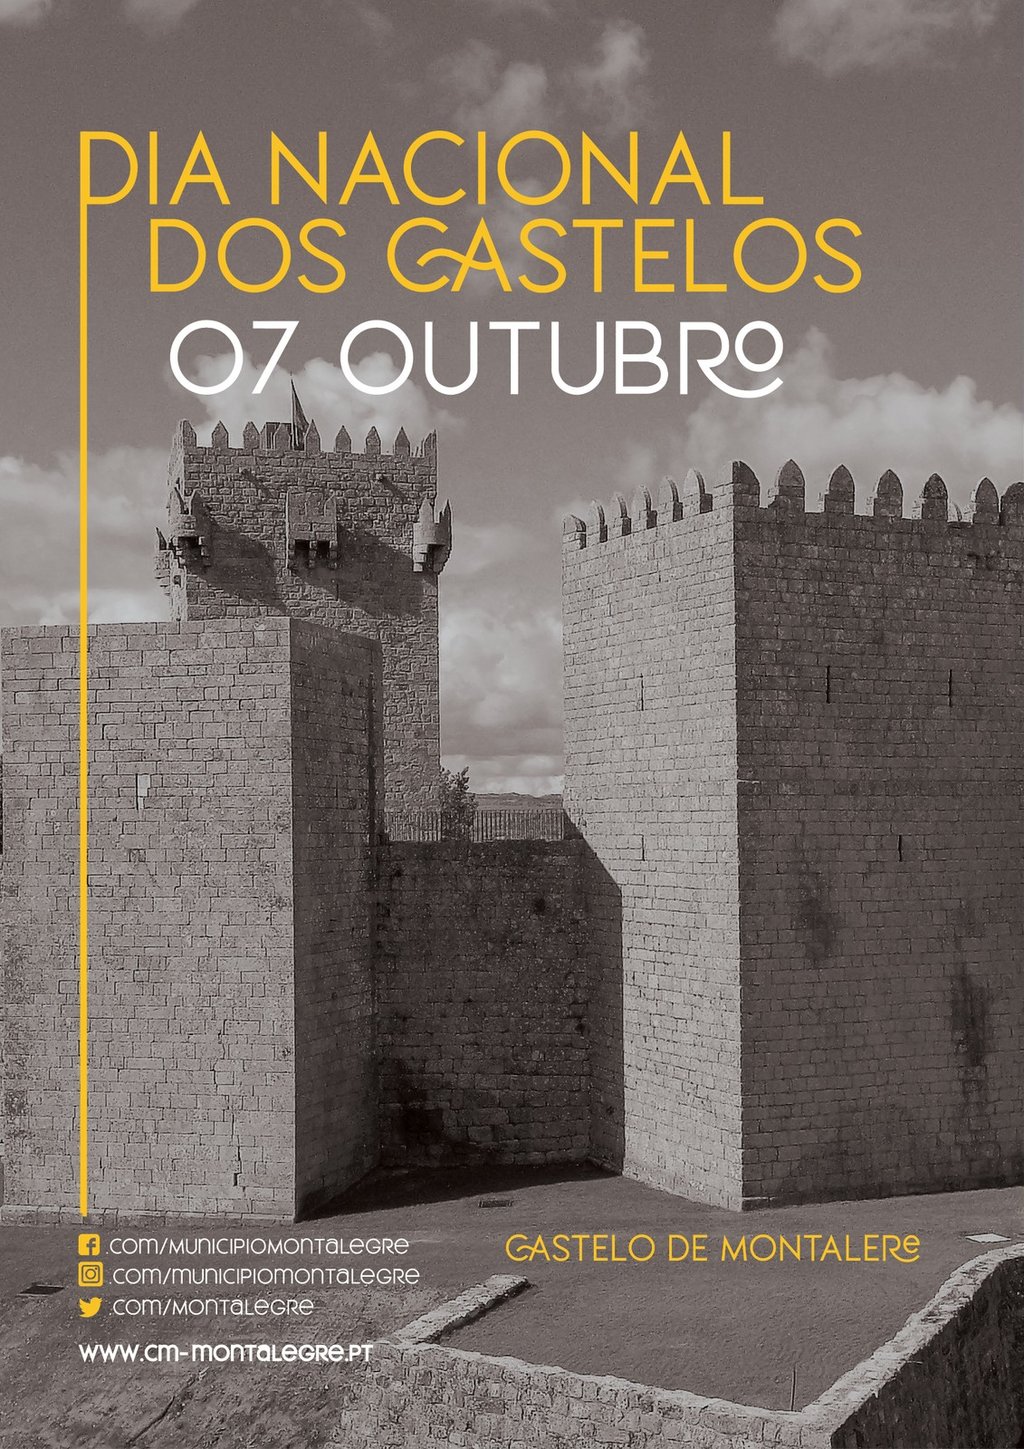 Castelo de Montalegre recebeu 17 mil visitas